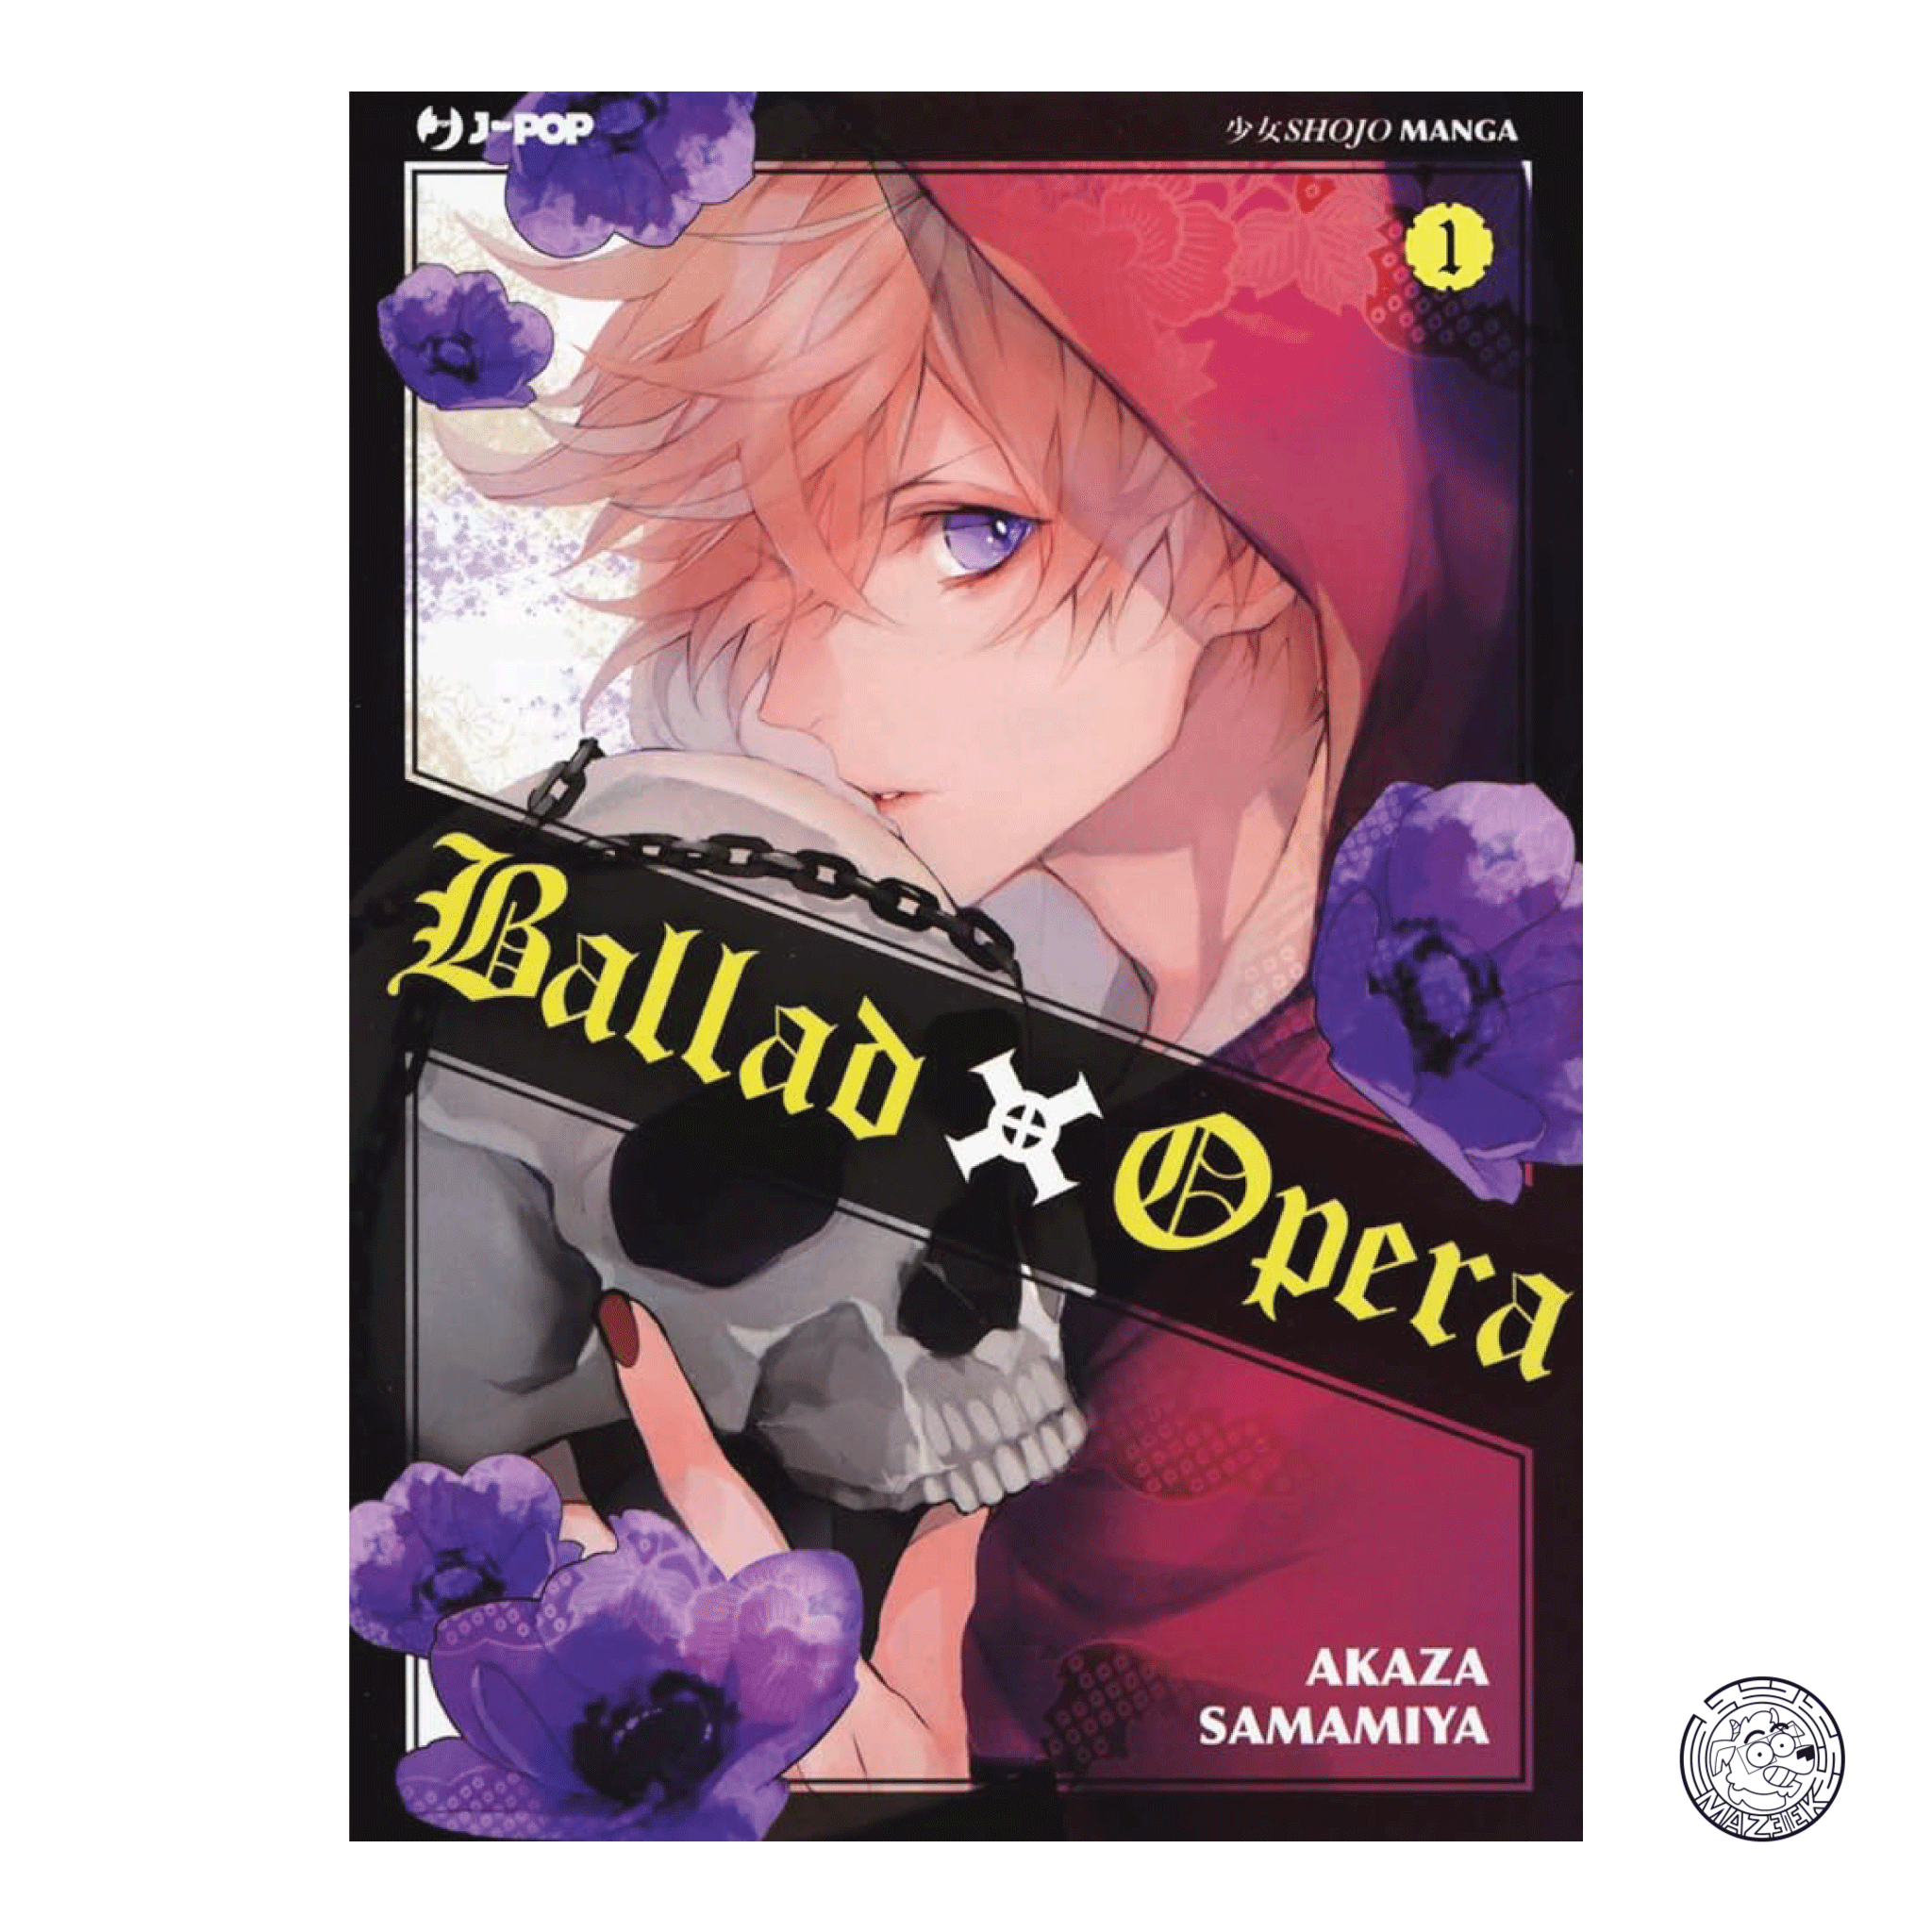 Ballad X Opera 01